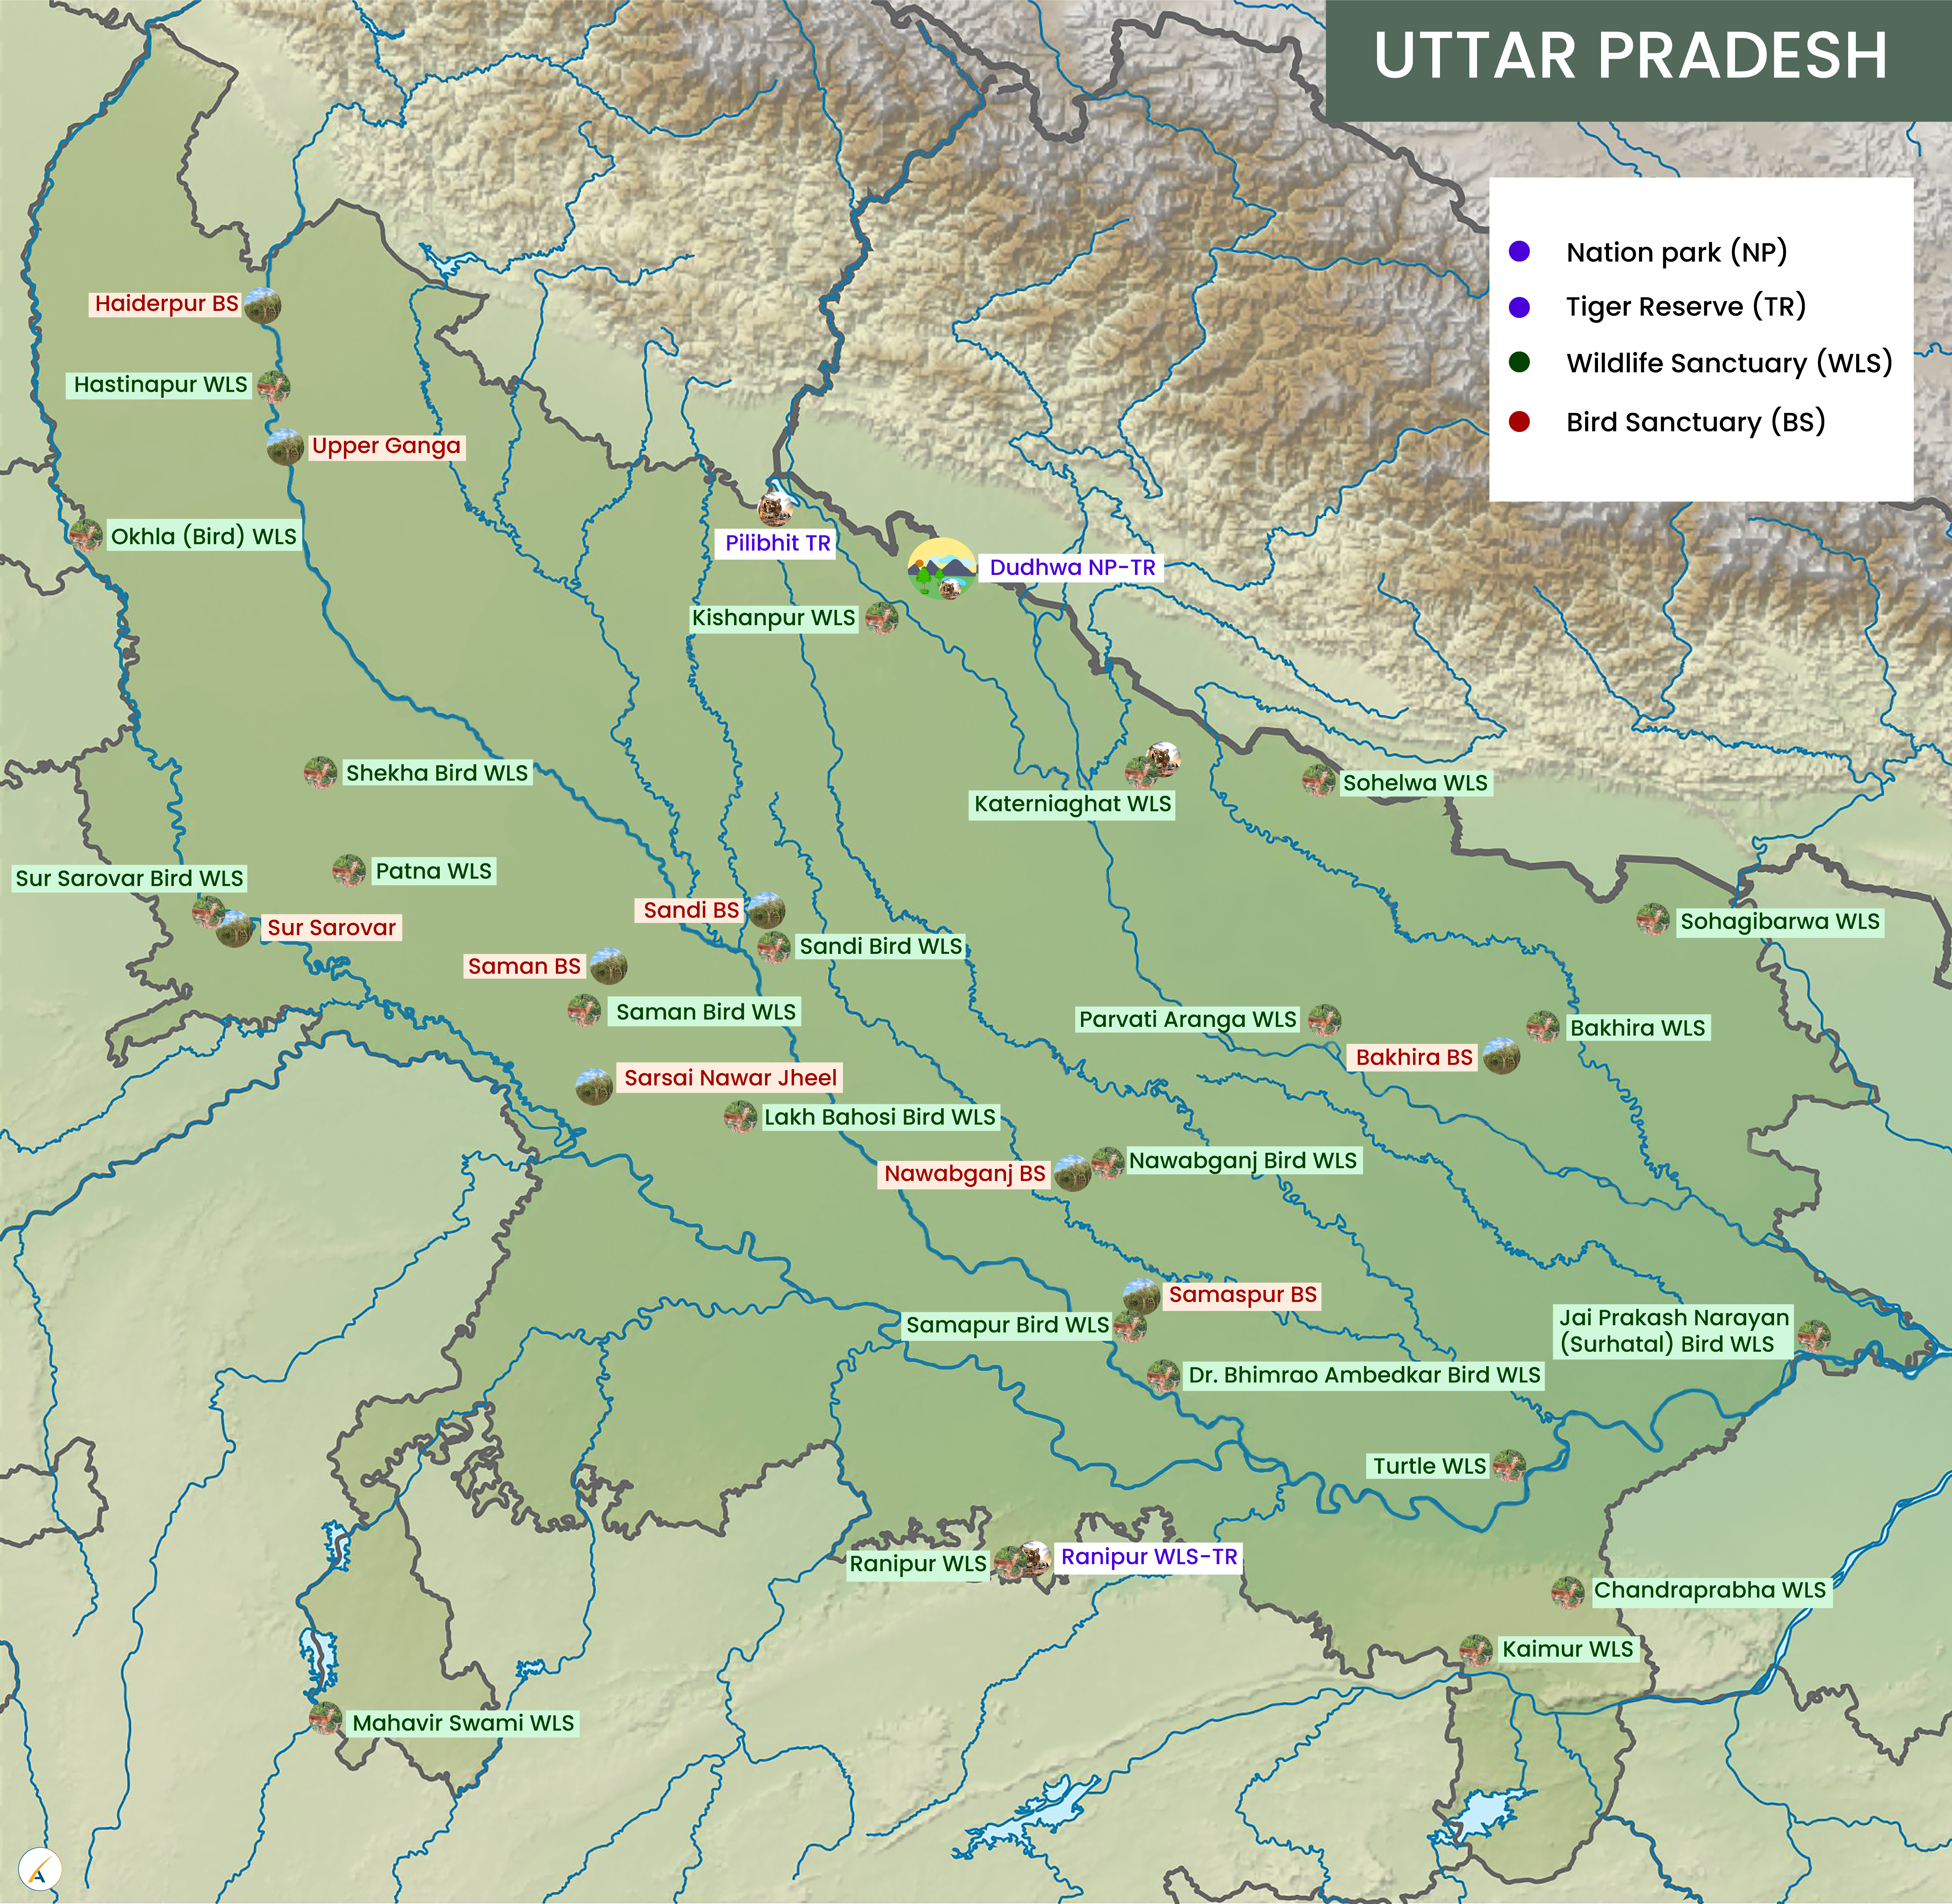 Uttar Pradesh National Parks, Tiger Reserves, Wildlife Sanctuaries